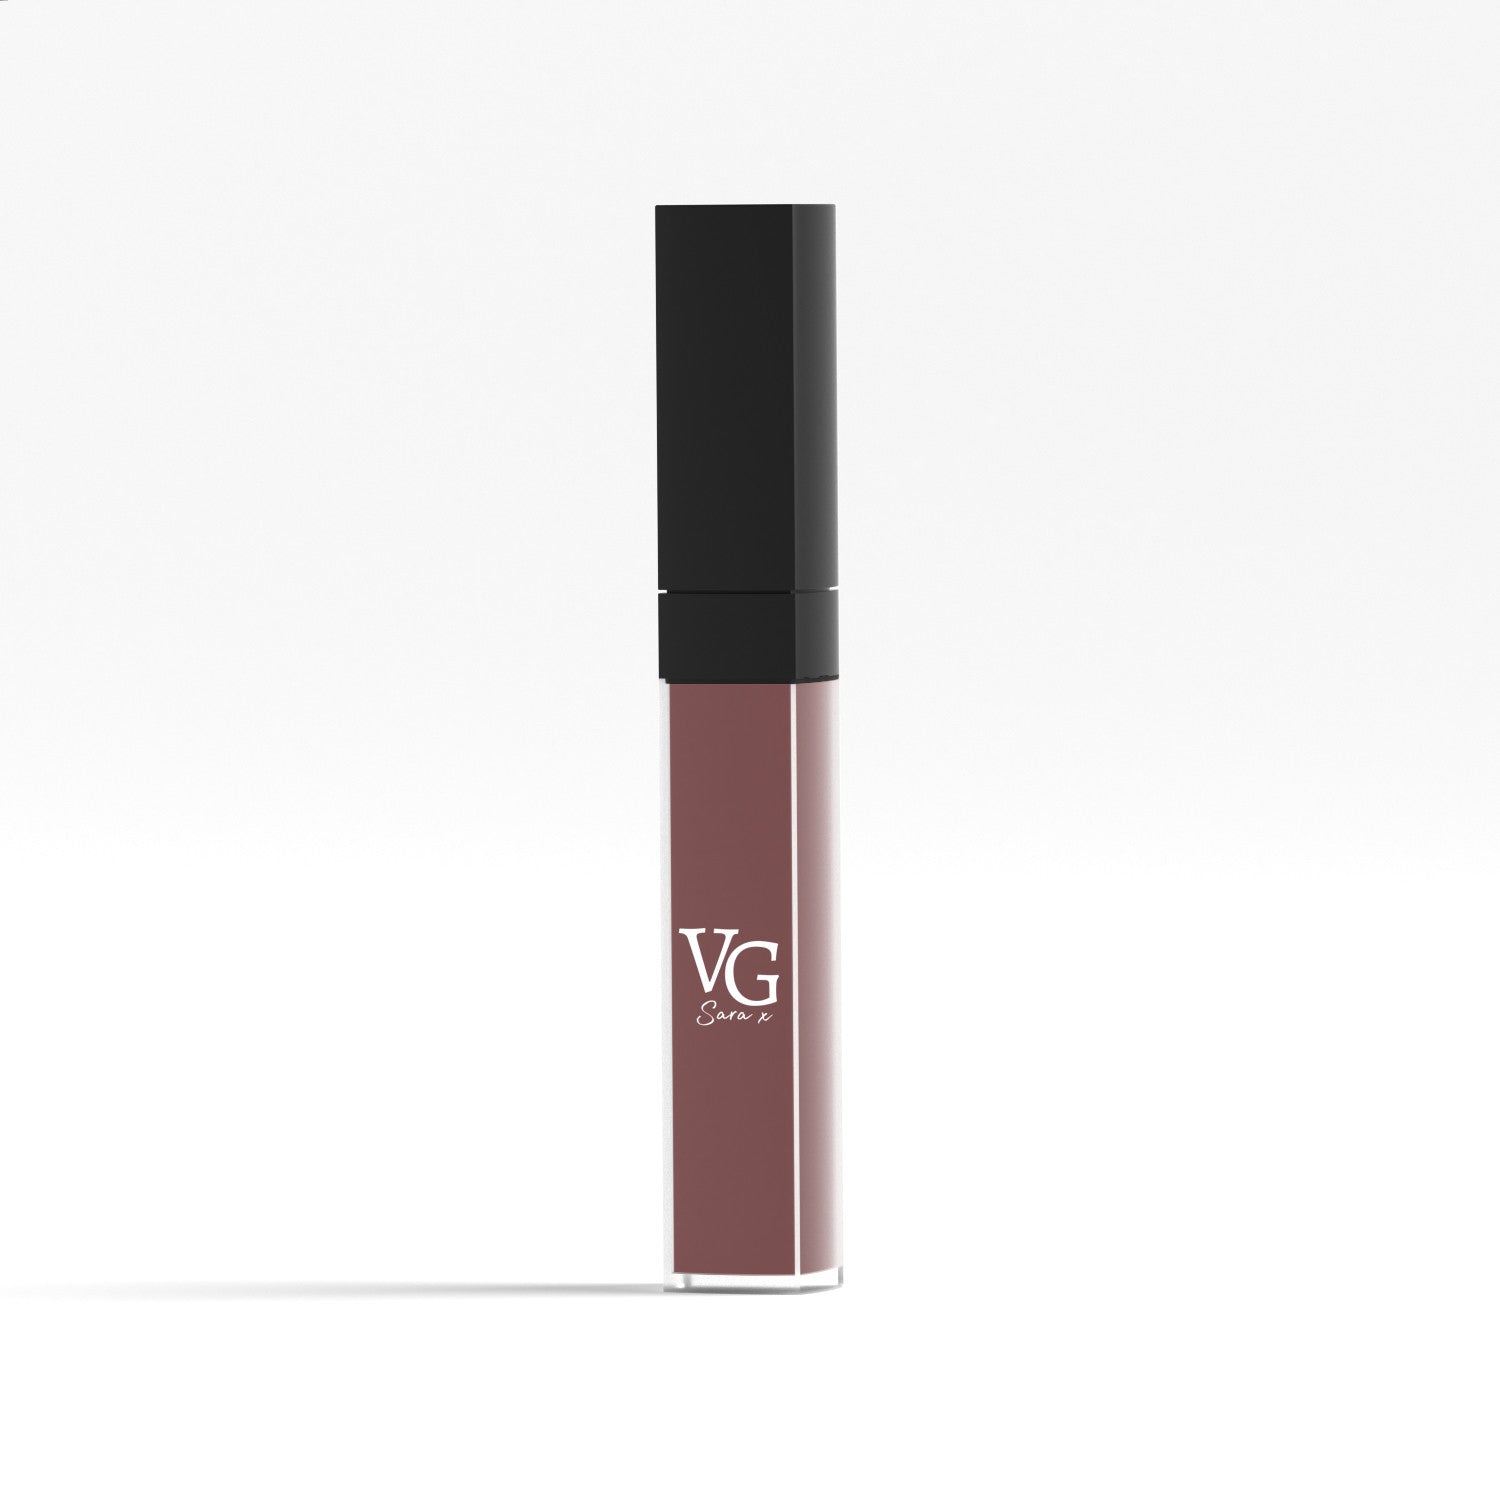 VG-branded vegan liquid lipstick in a light taupe hue